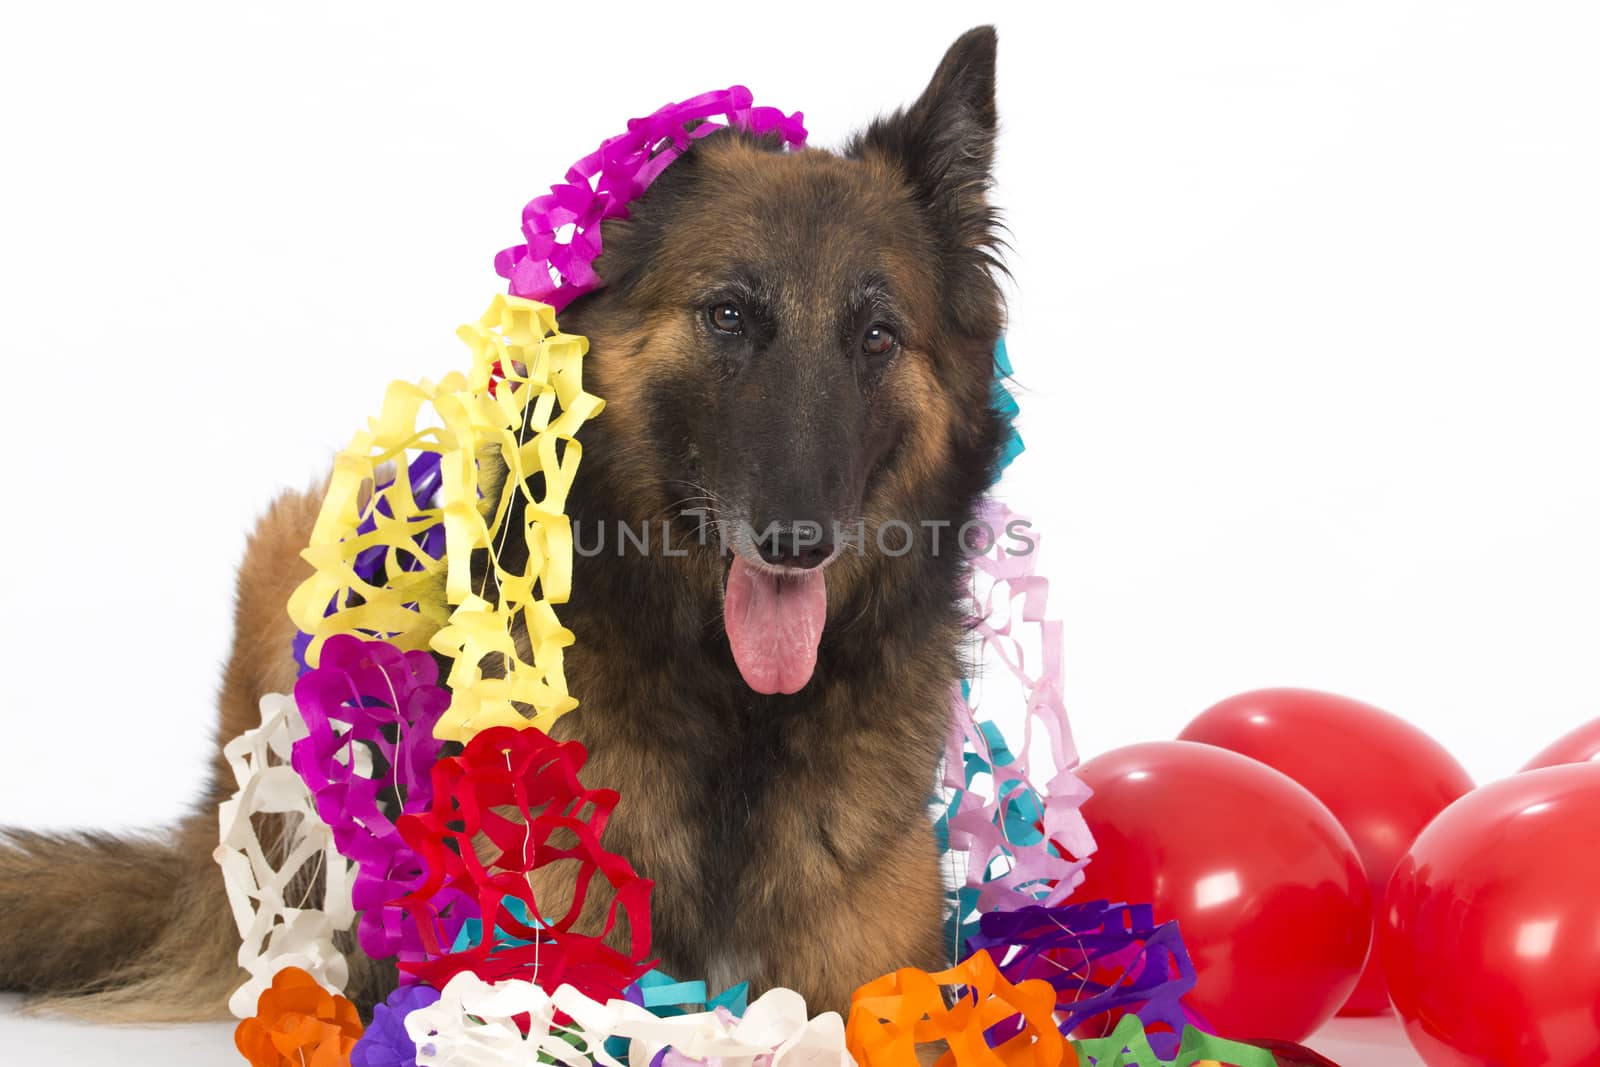 Belgian Shepherd Tervuren dog with balloons and garlands, isolated on white studio background